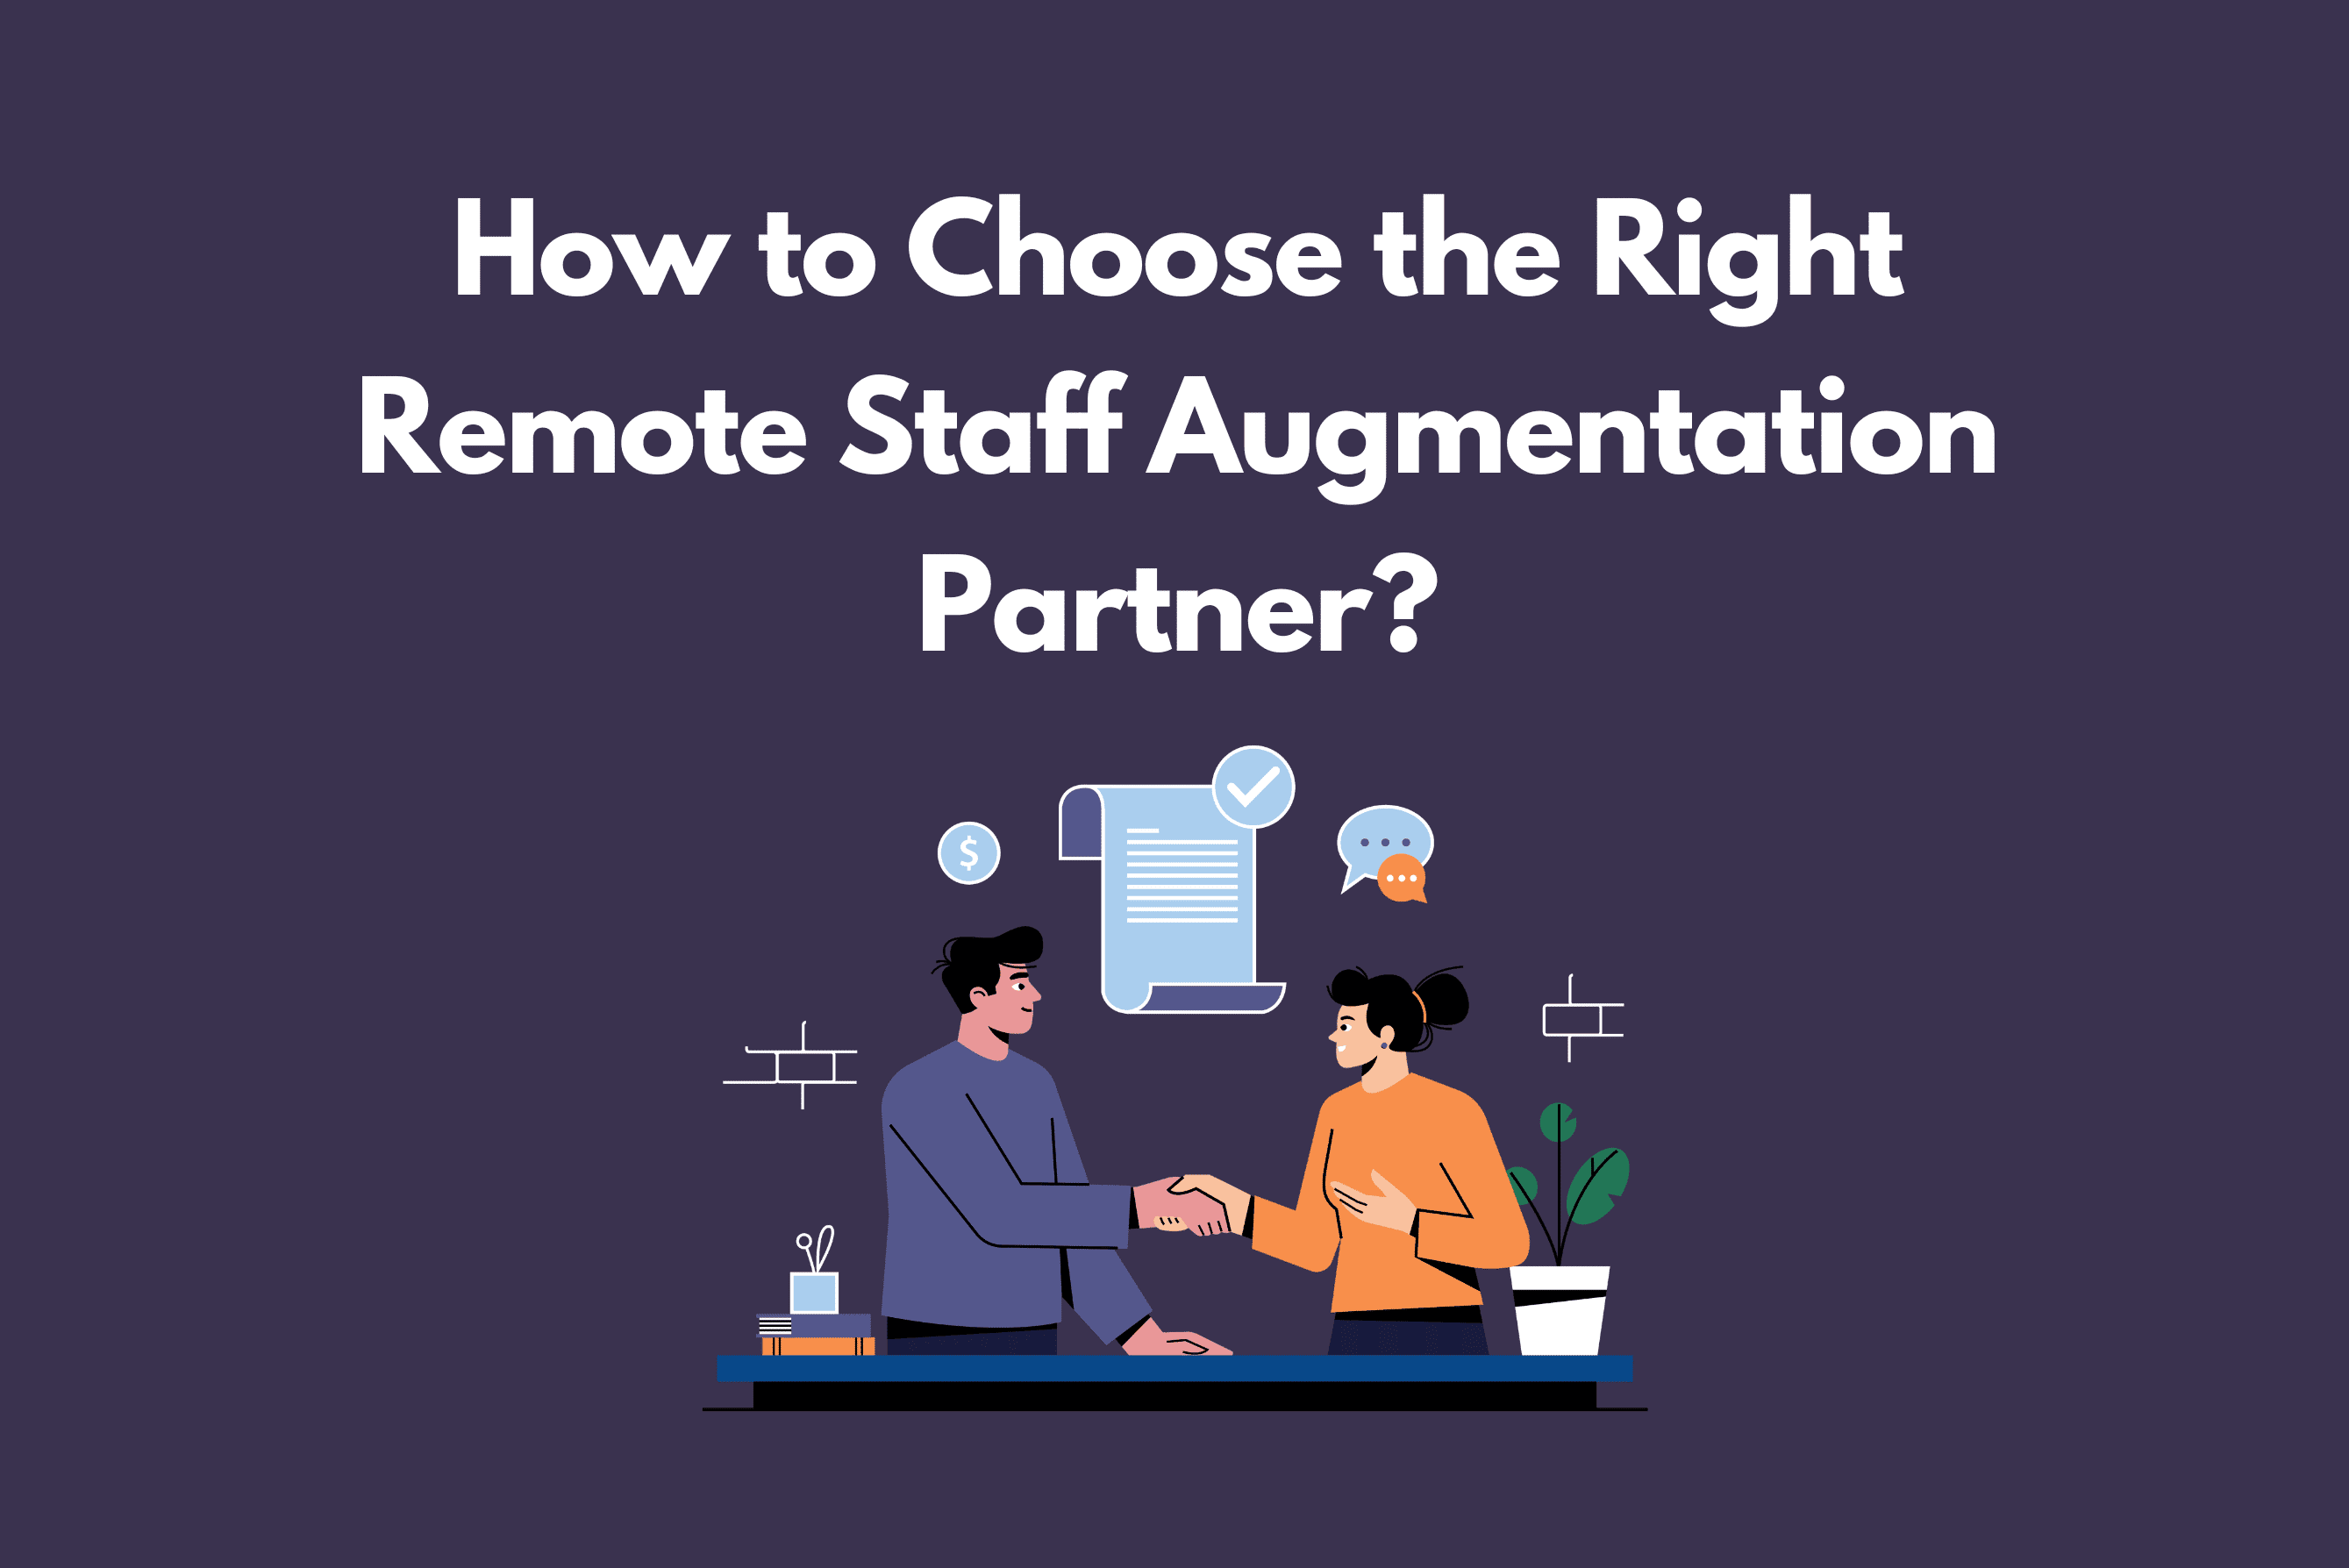 Remote staff augmentation partner